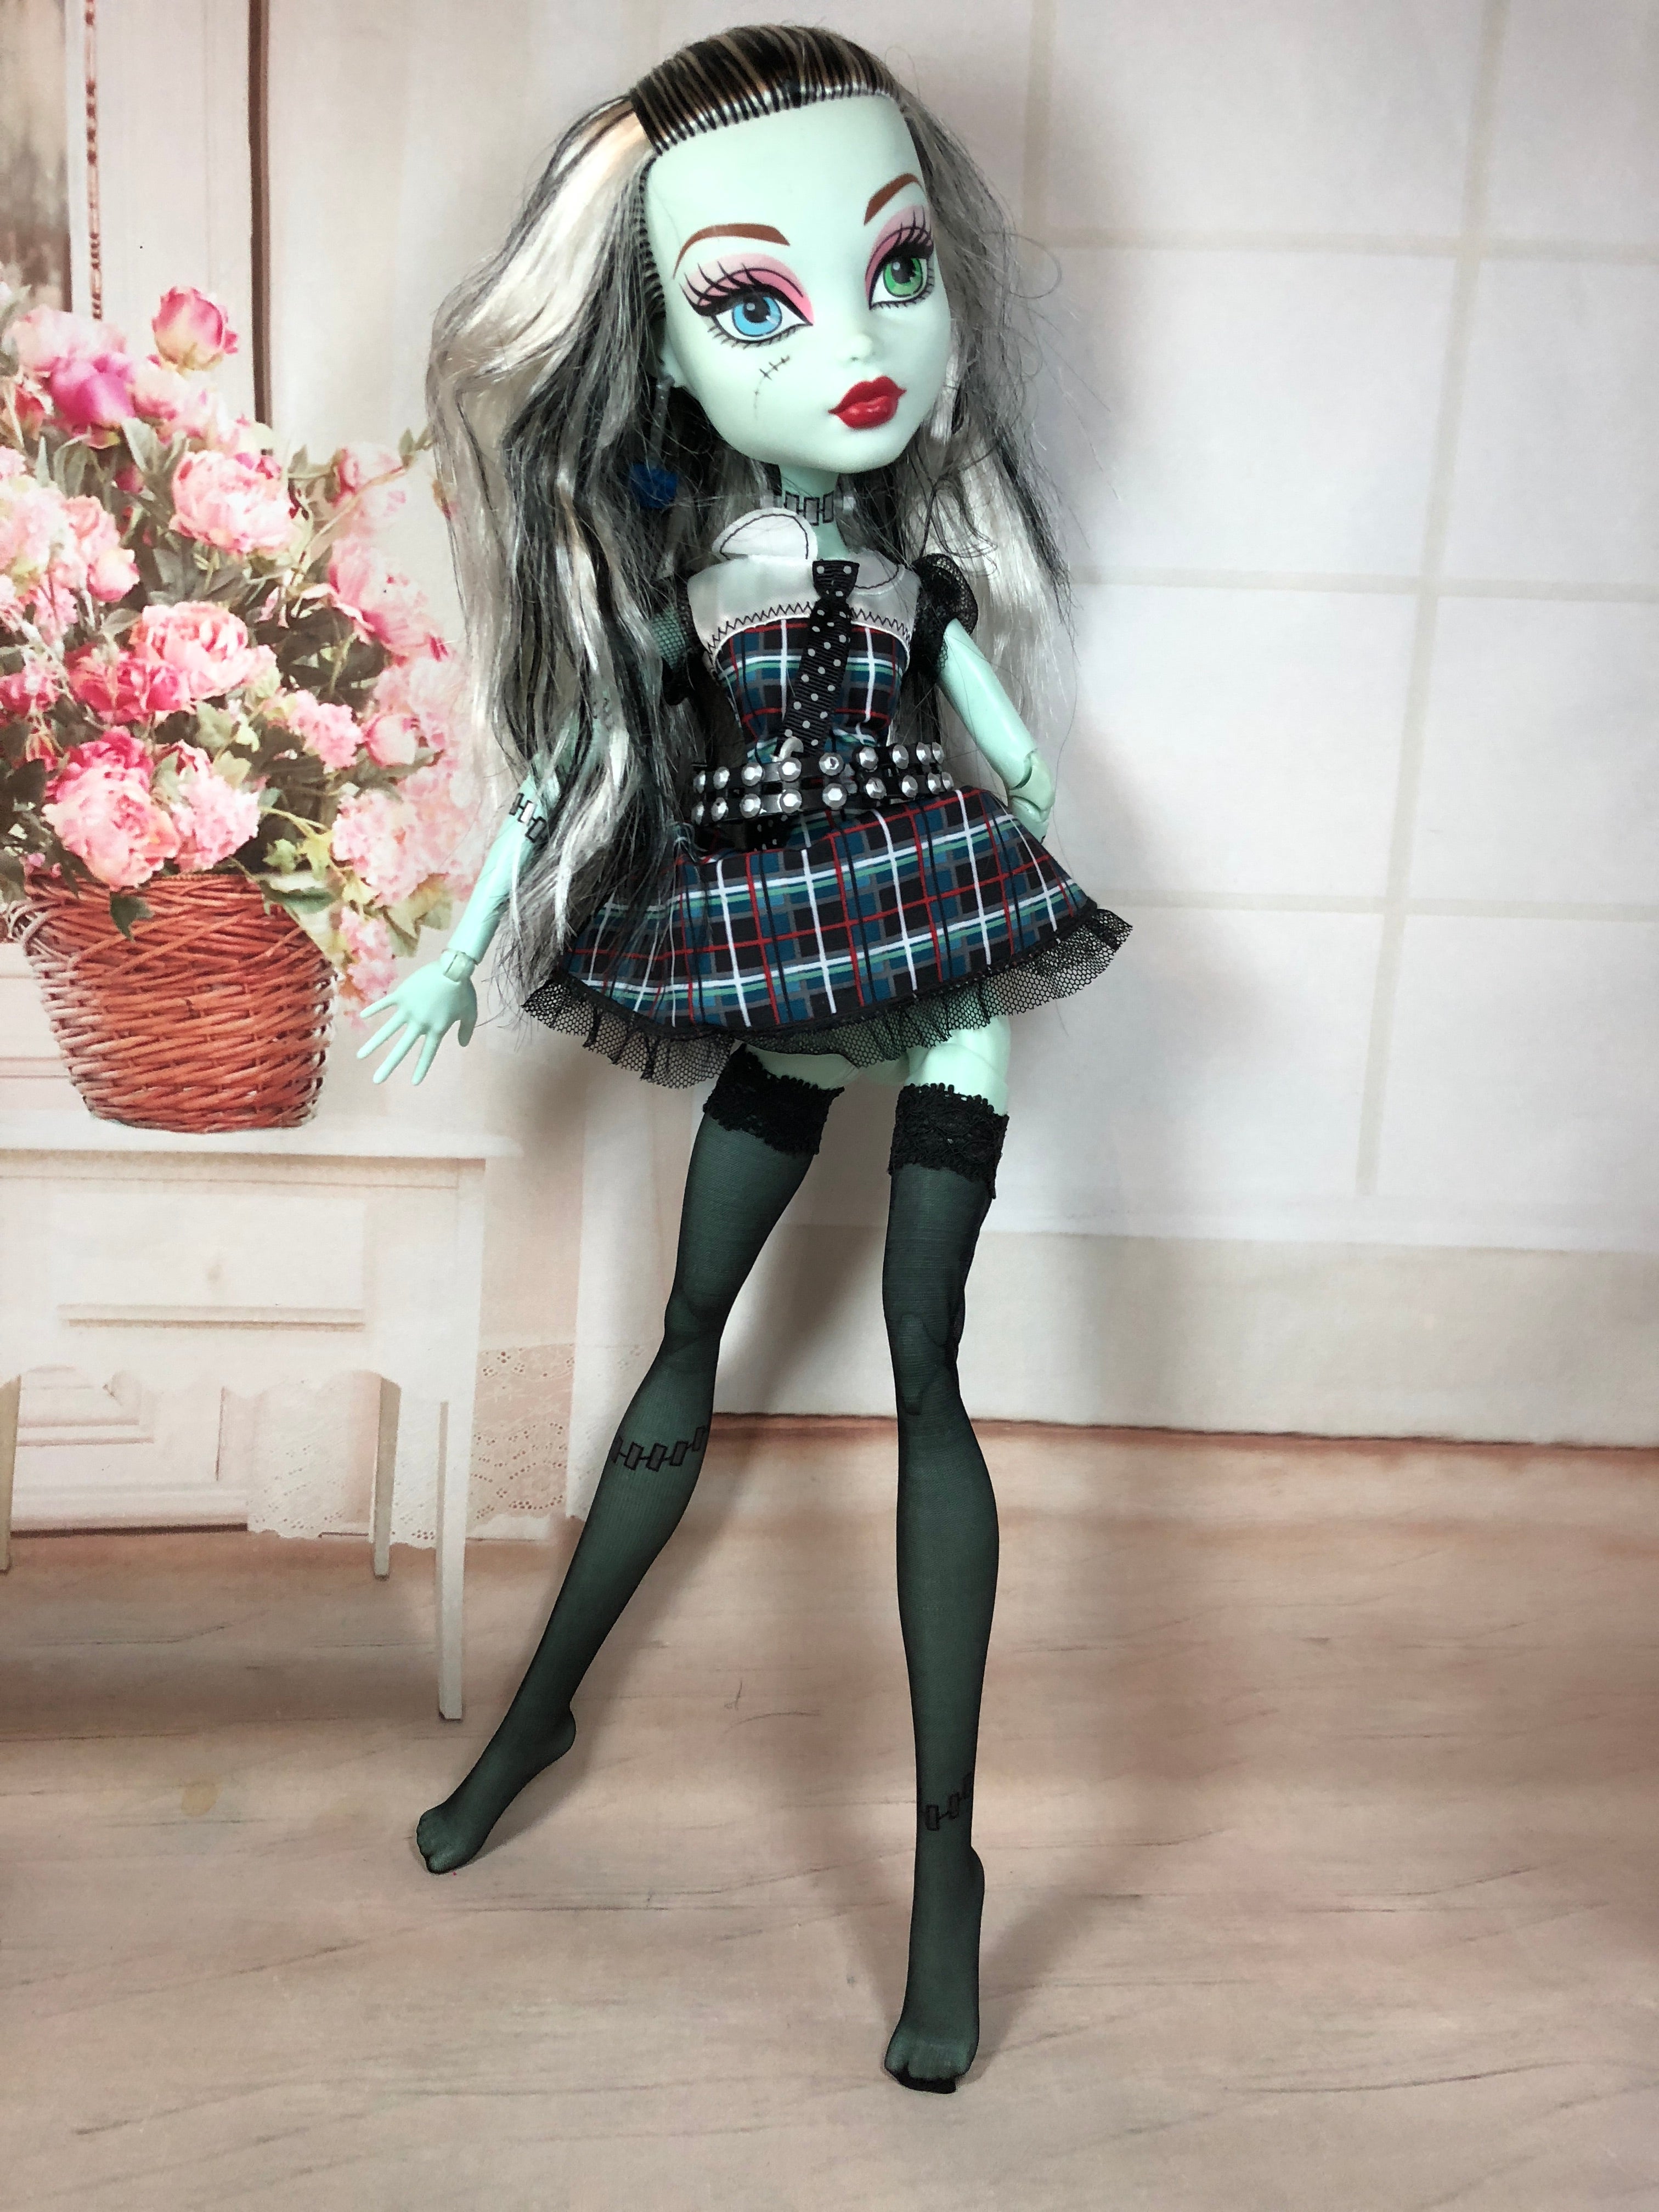 17" Mattel Monster High Frightfully Tall